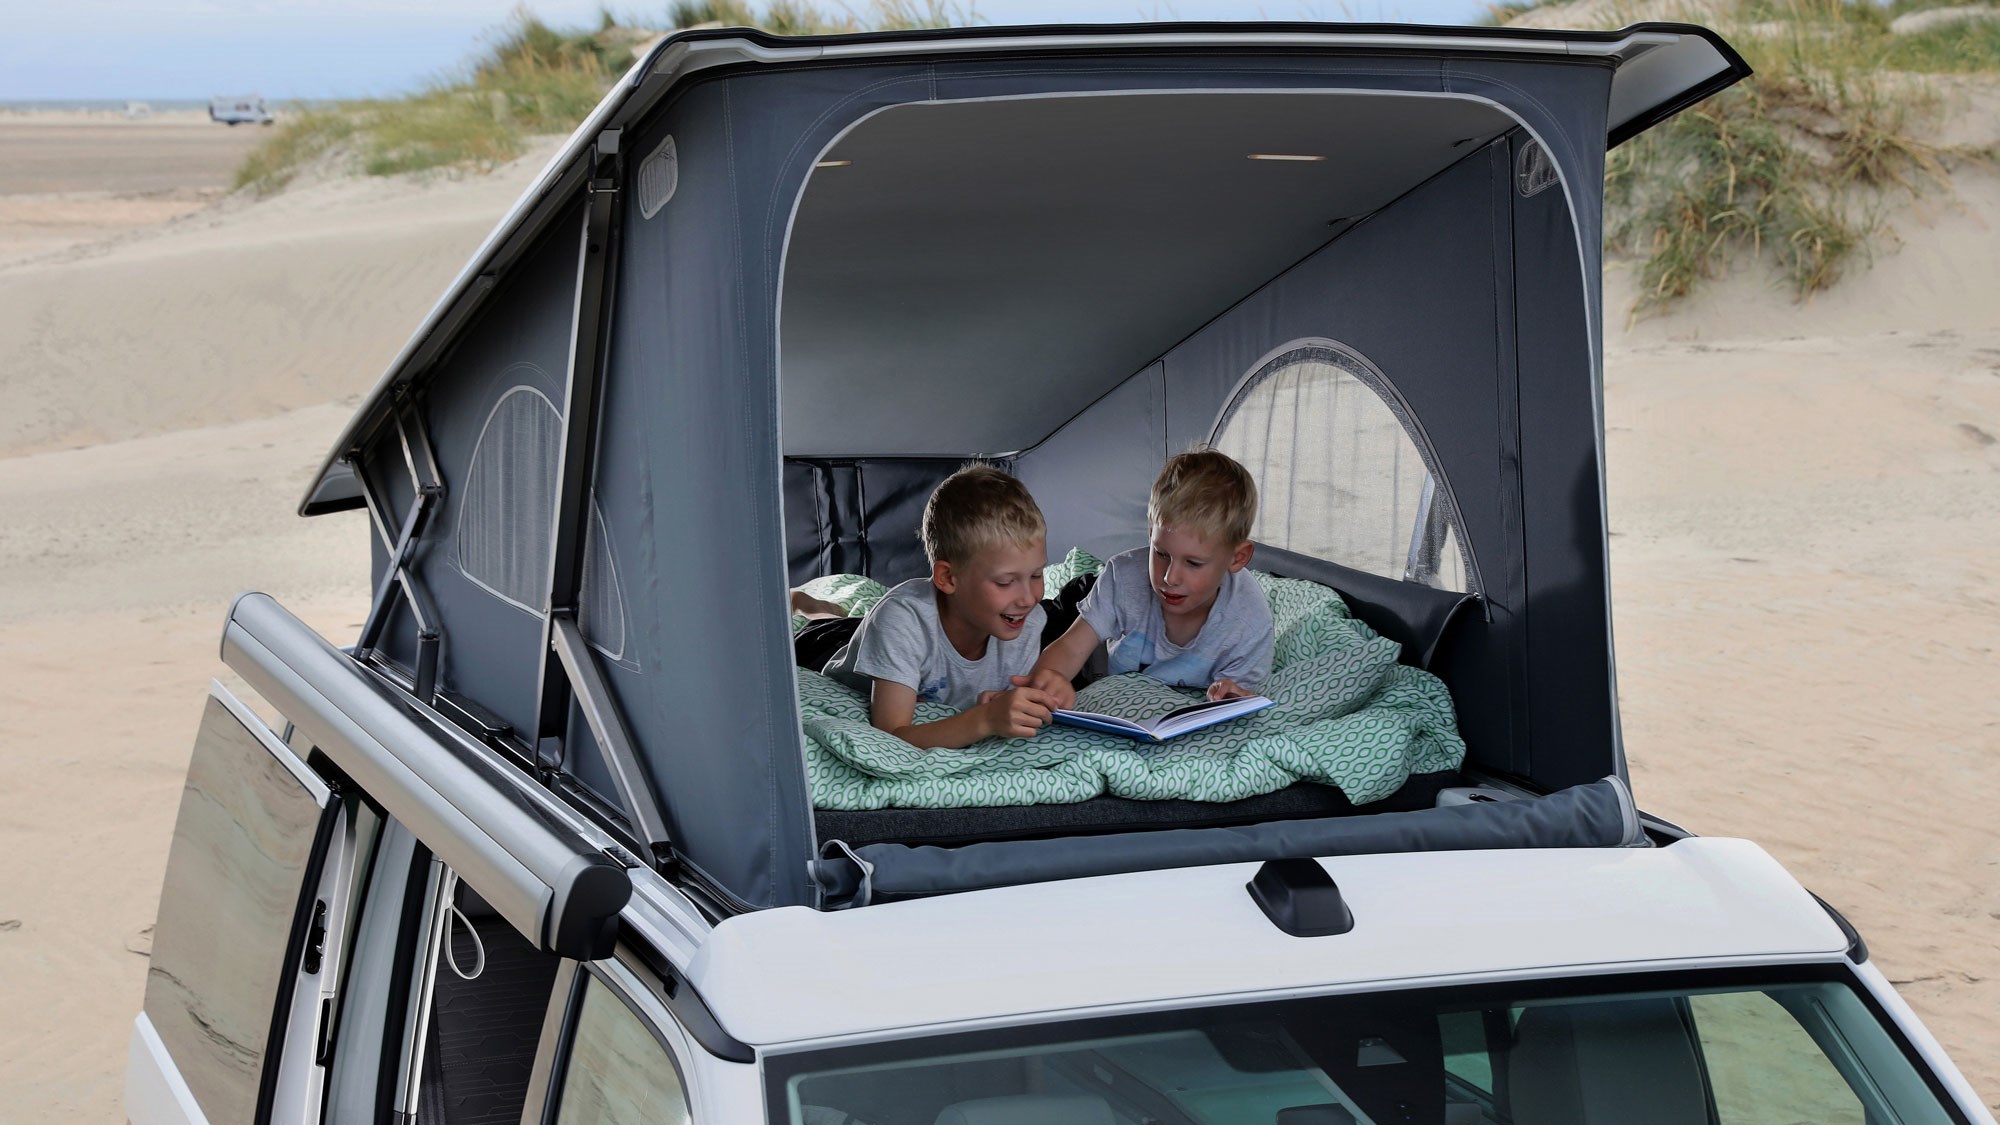 Volkswagen California 6.1 campervan full details on CAR | CAR Magazine